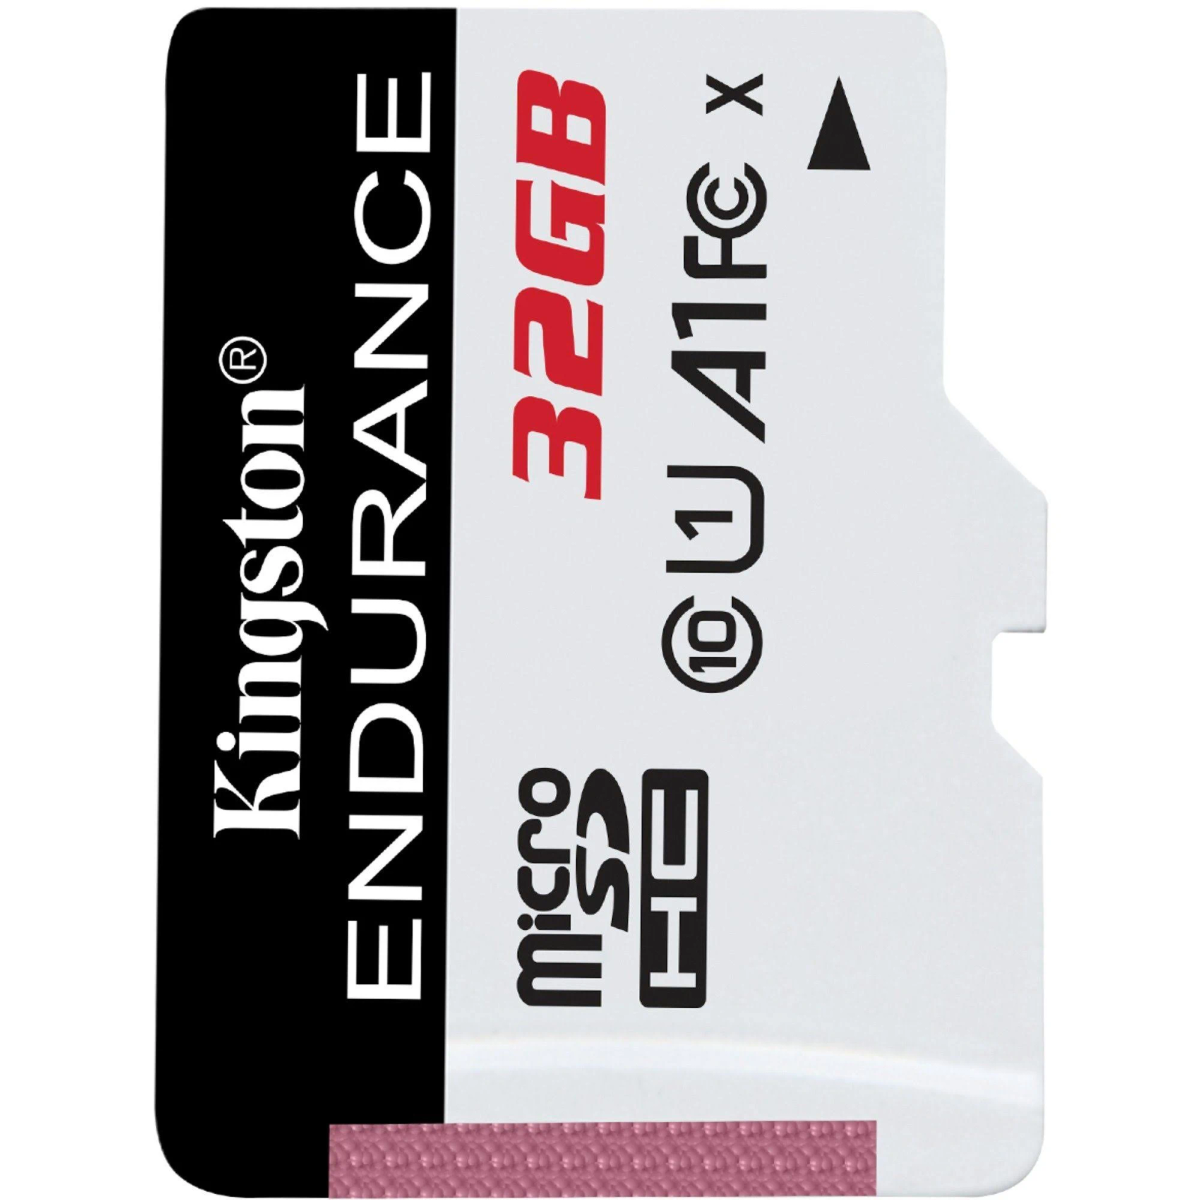 KINGSTON m0000A92WD, GB, 95 MB/s Speicherkarte, 32 Micro-SD